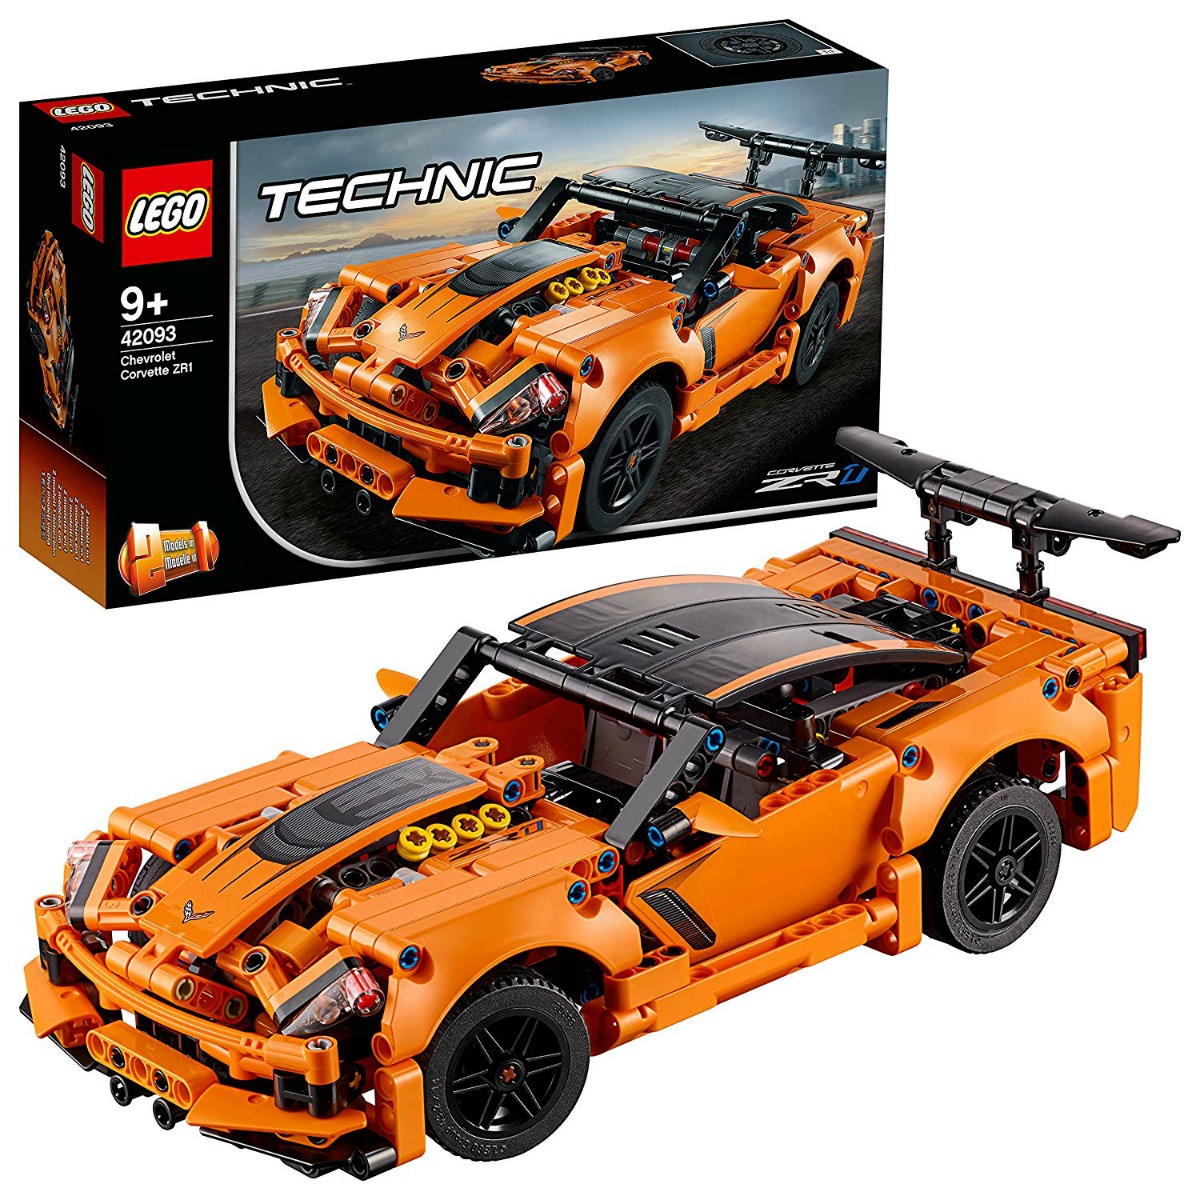 orange corvette built out of LEGOs with LEGO box